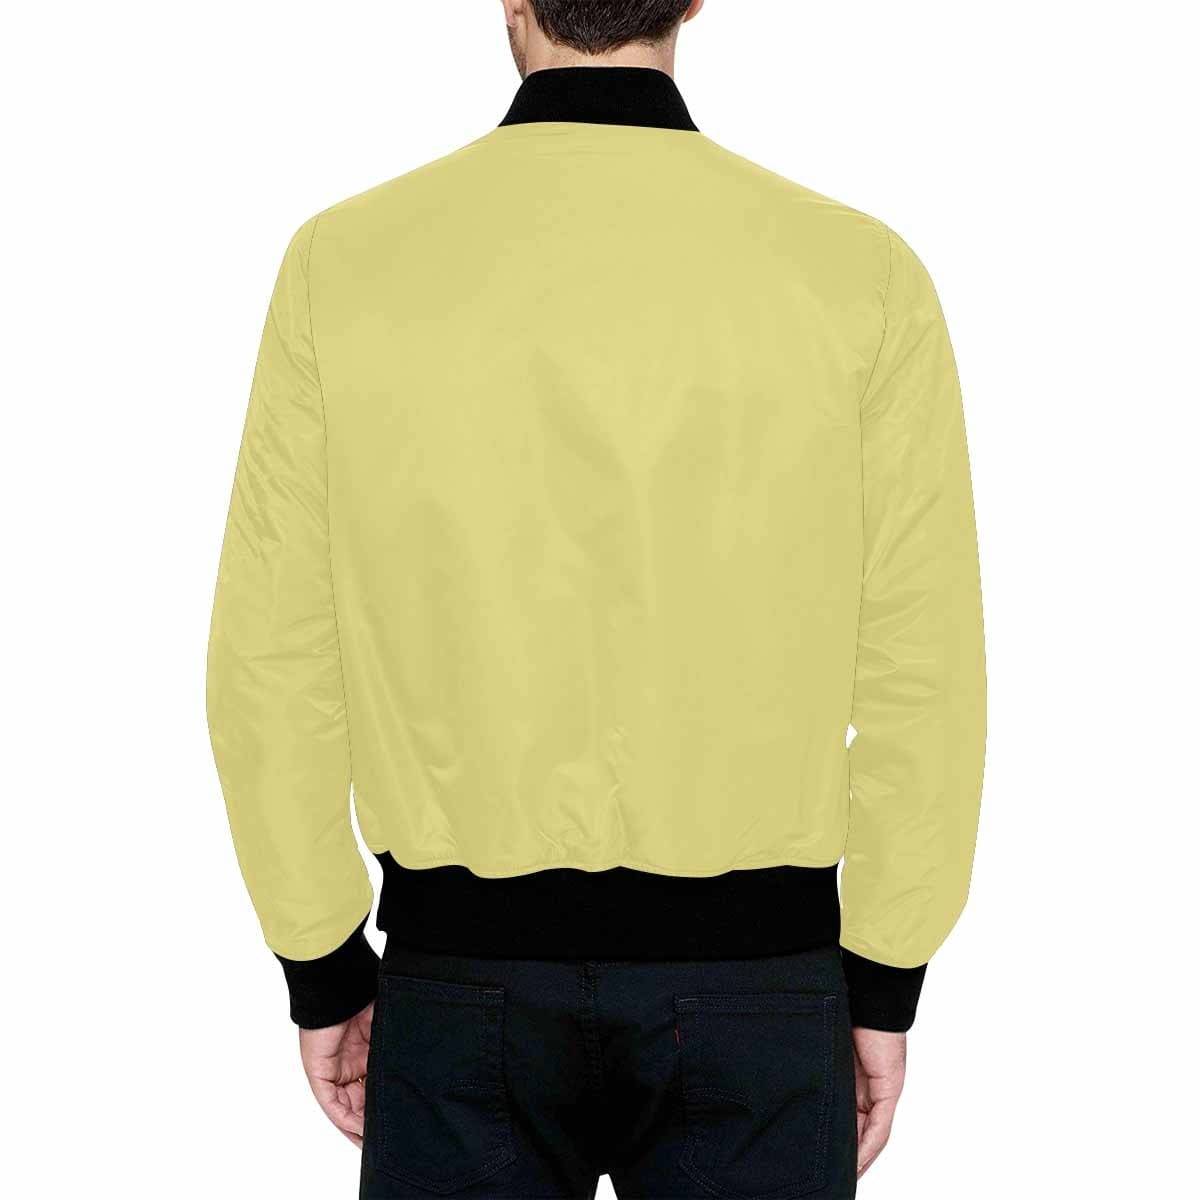 Mens Jacket Khaki Yellow And Black Bomber Jacket - Mens | Jackets | Bombers